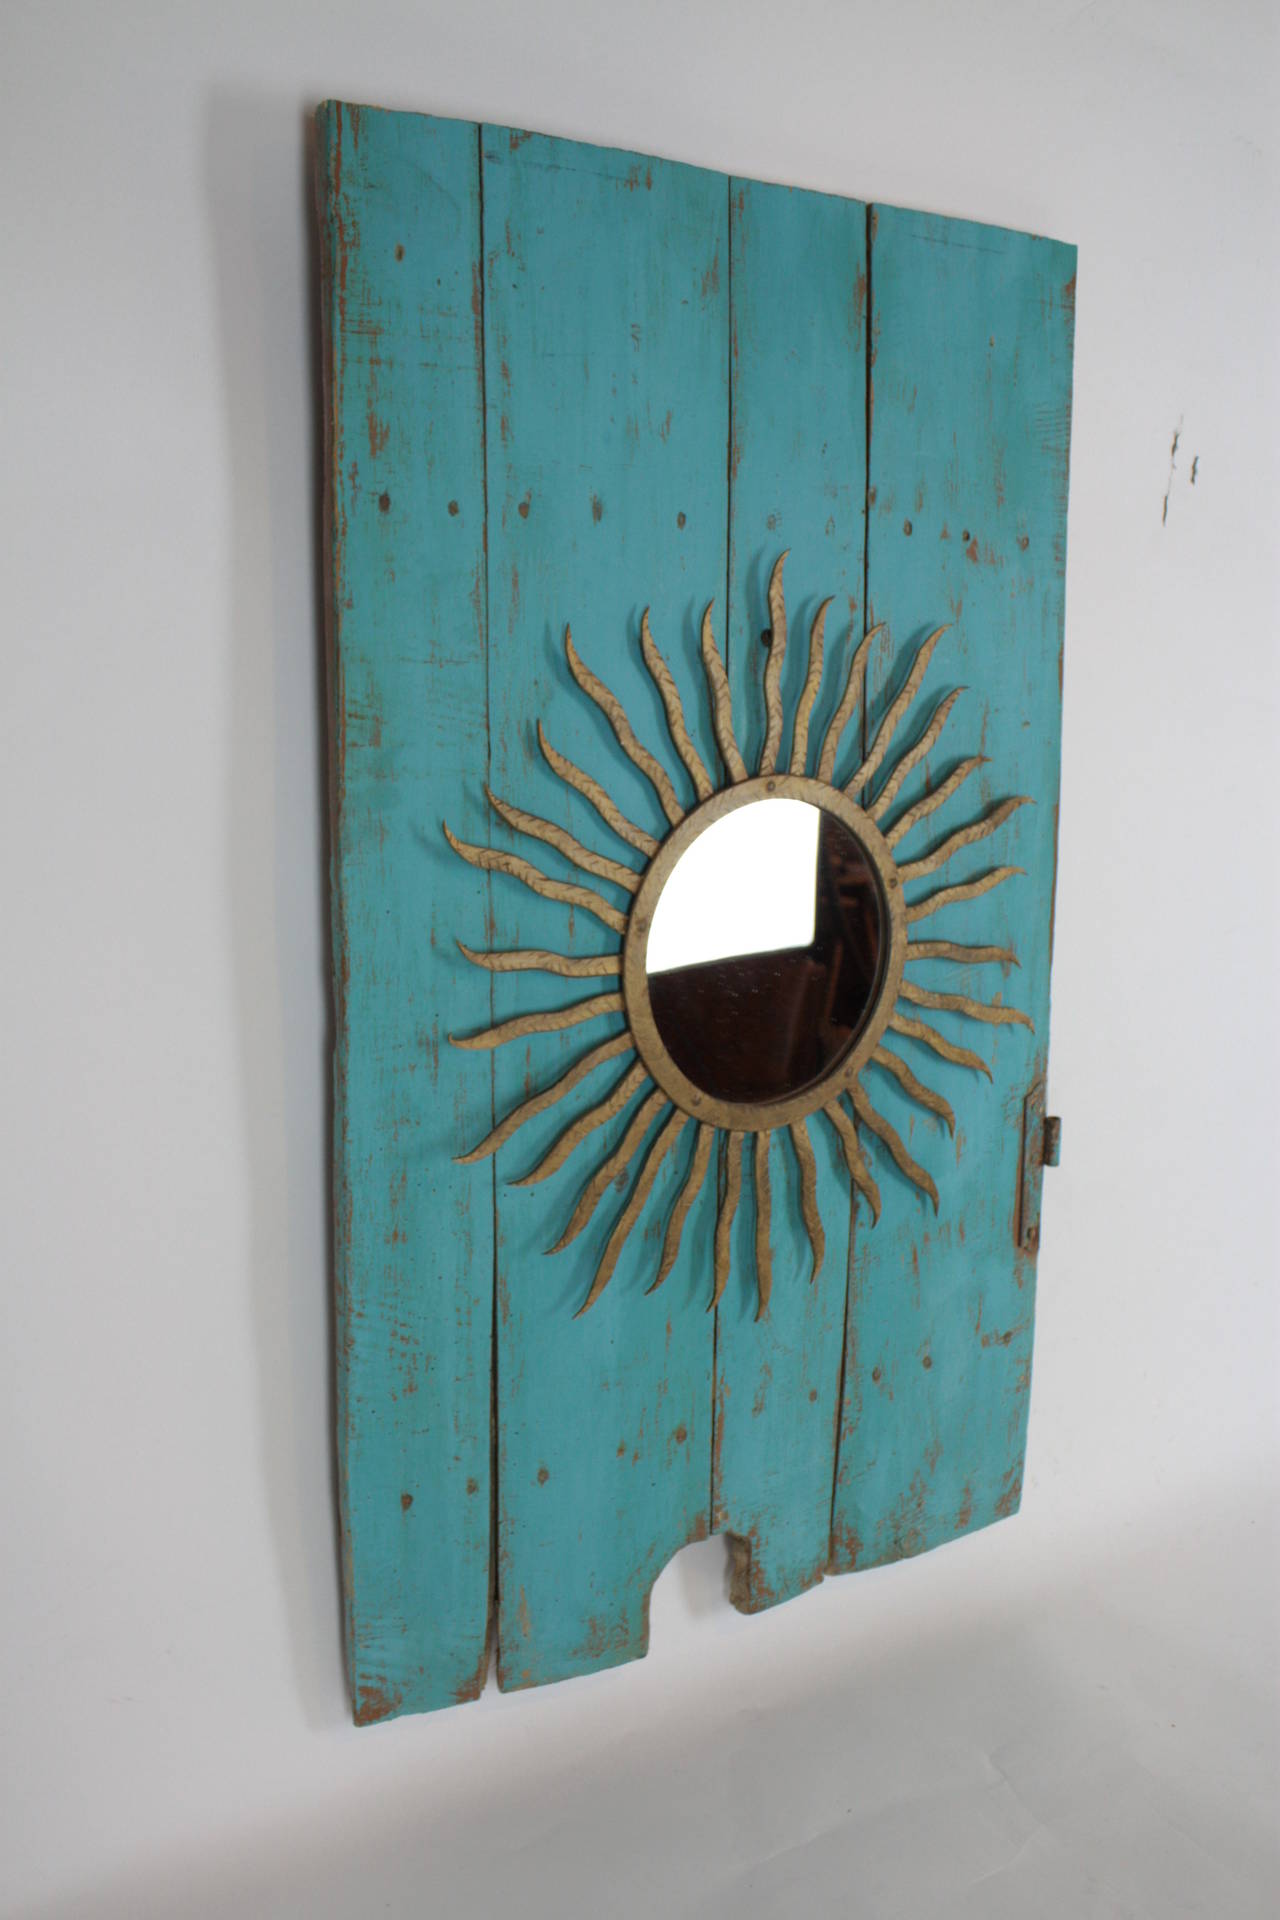 Spanish Gilt Iron Sunburst Mirror and 19th Century Turquoise Door Wall Decoration